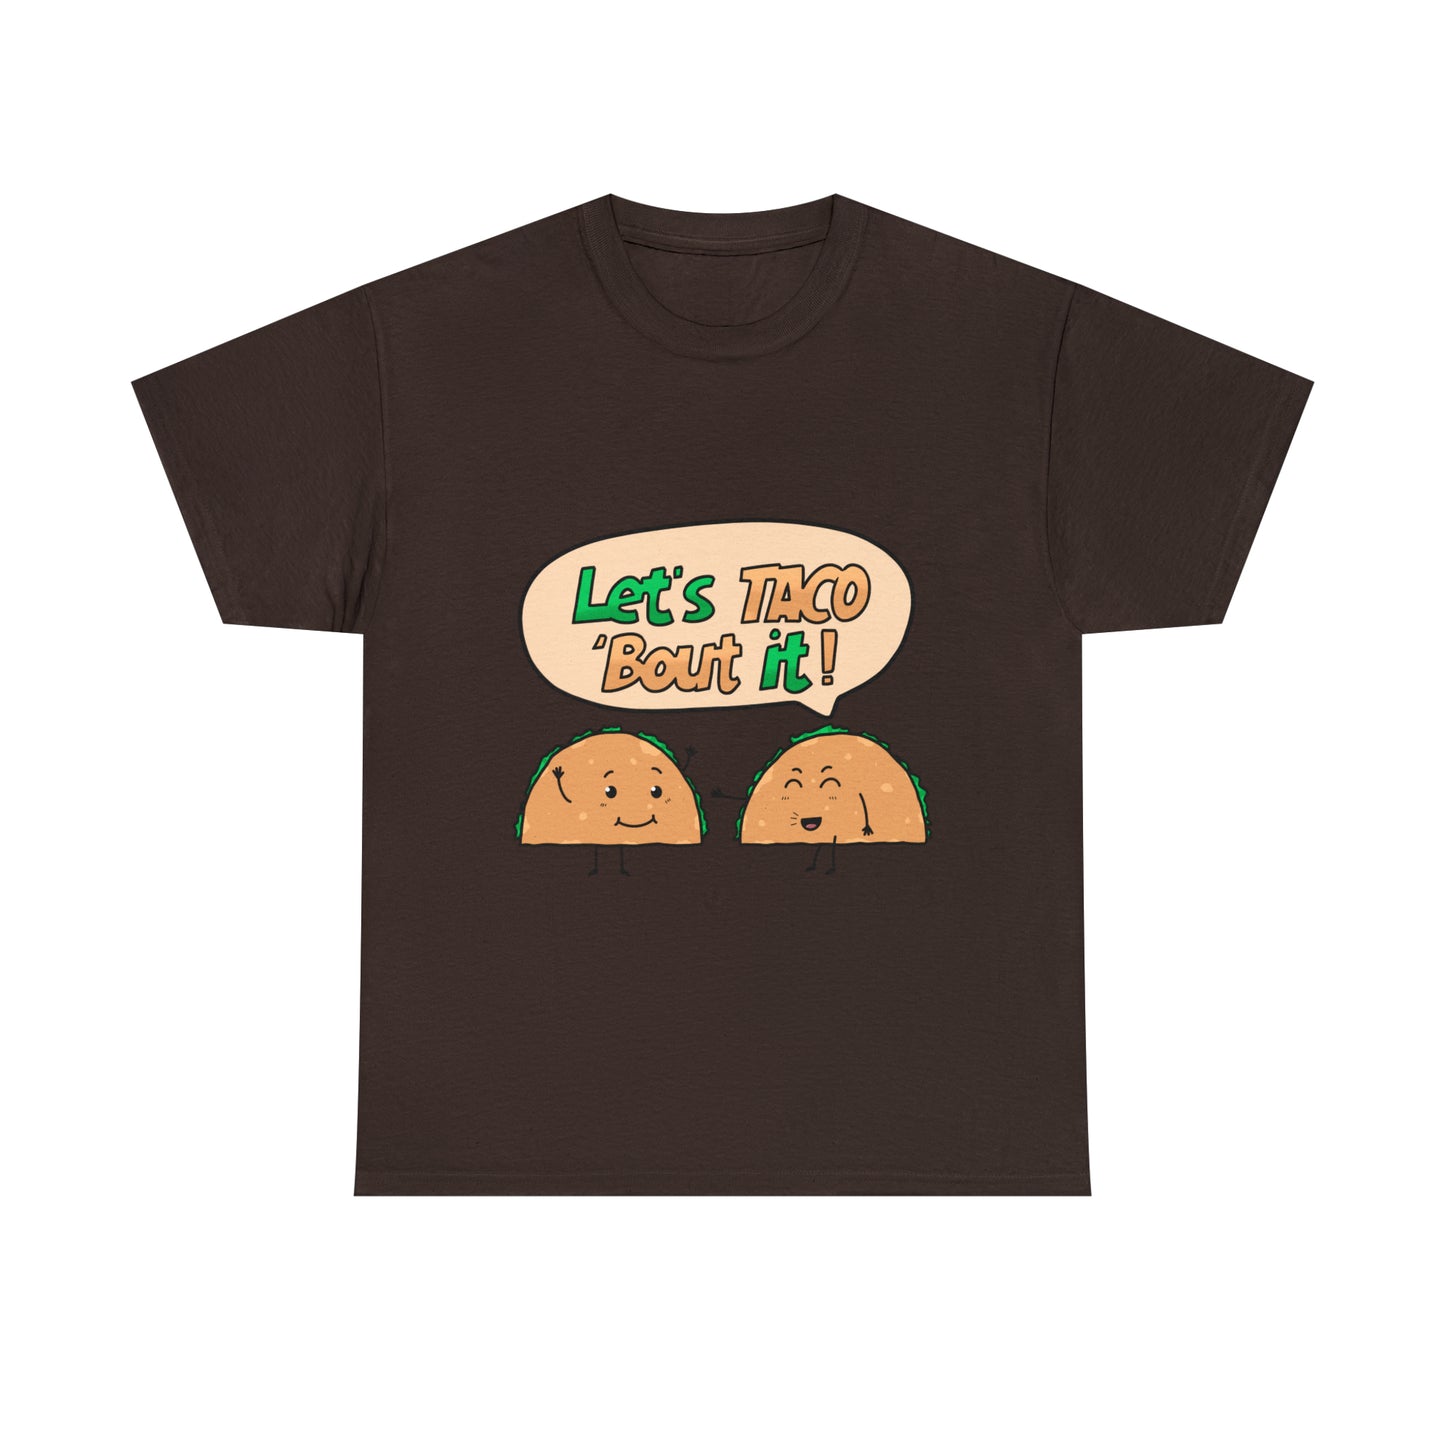 Custom Parody T-shirt, Let's TACO' bout it design